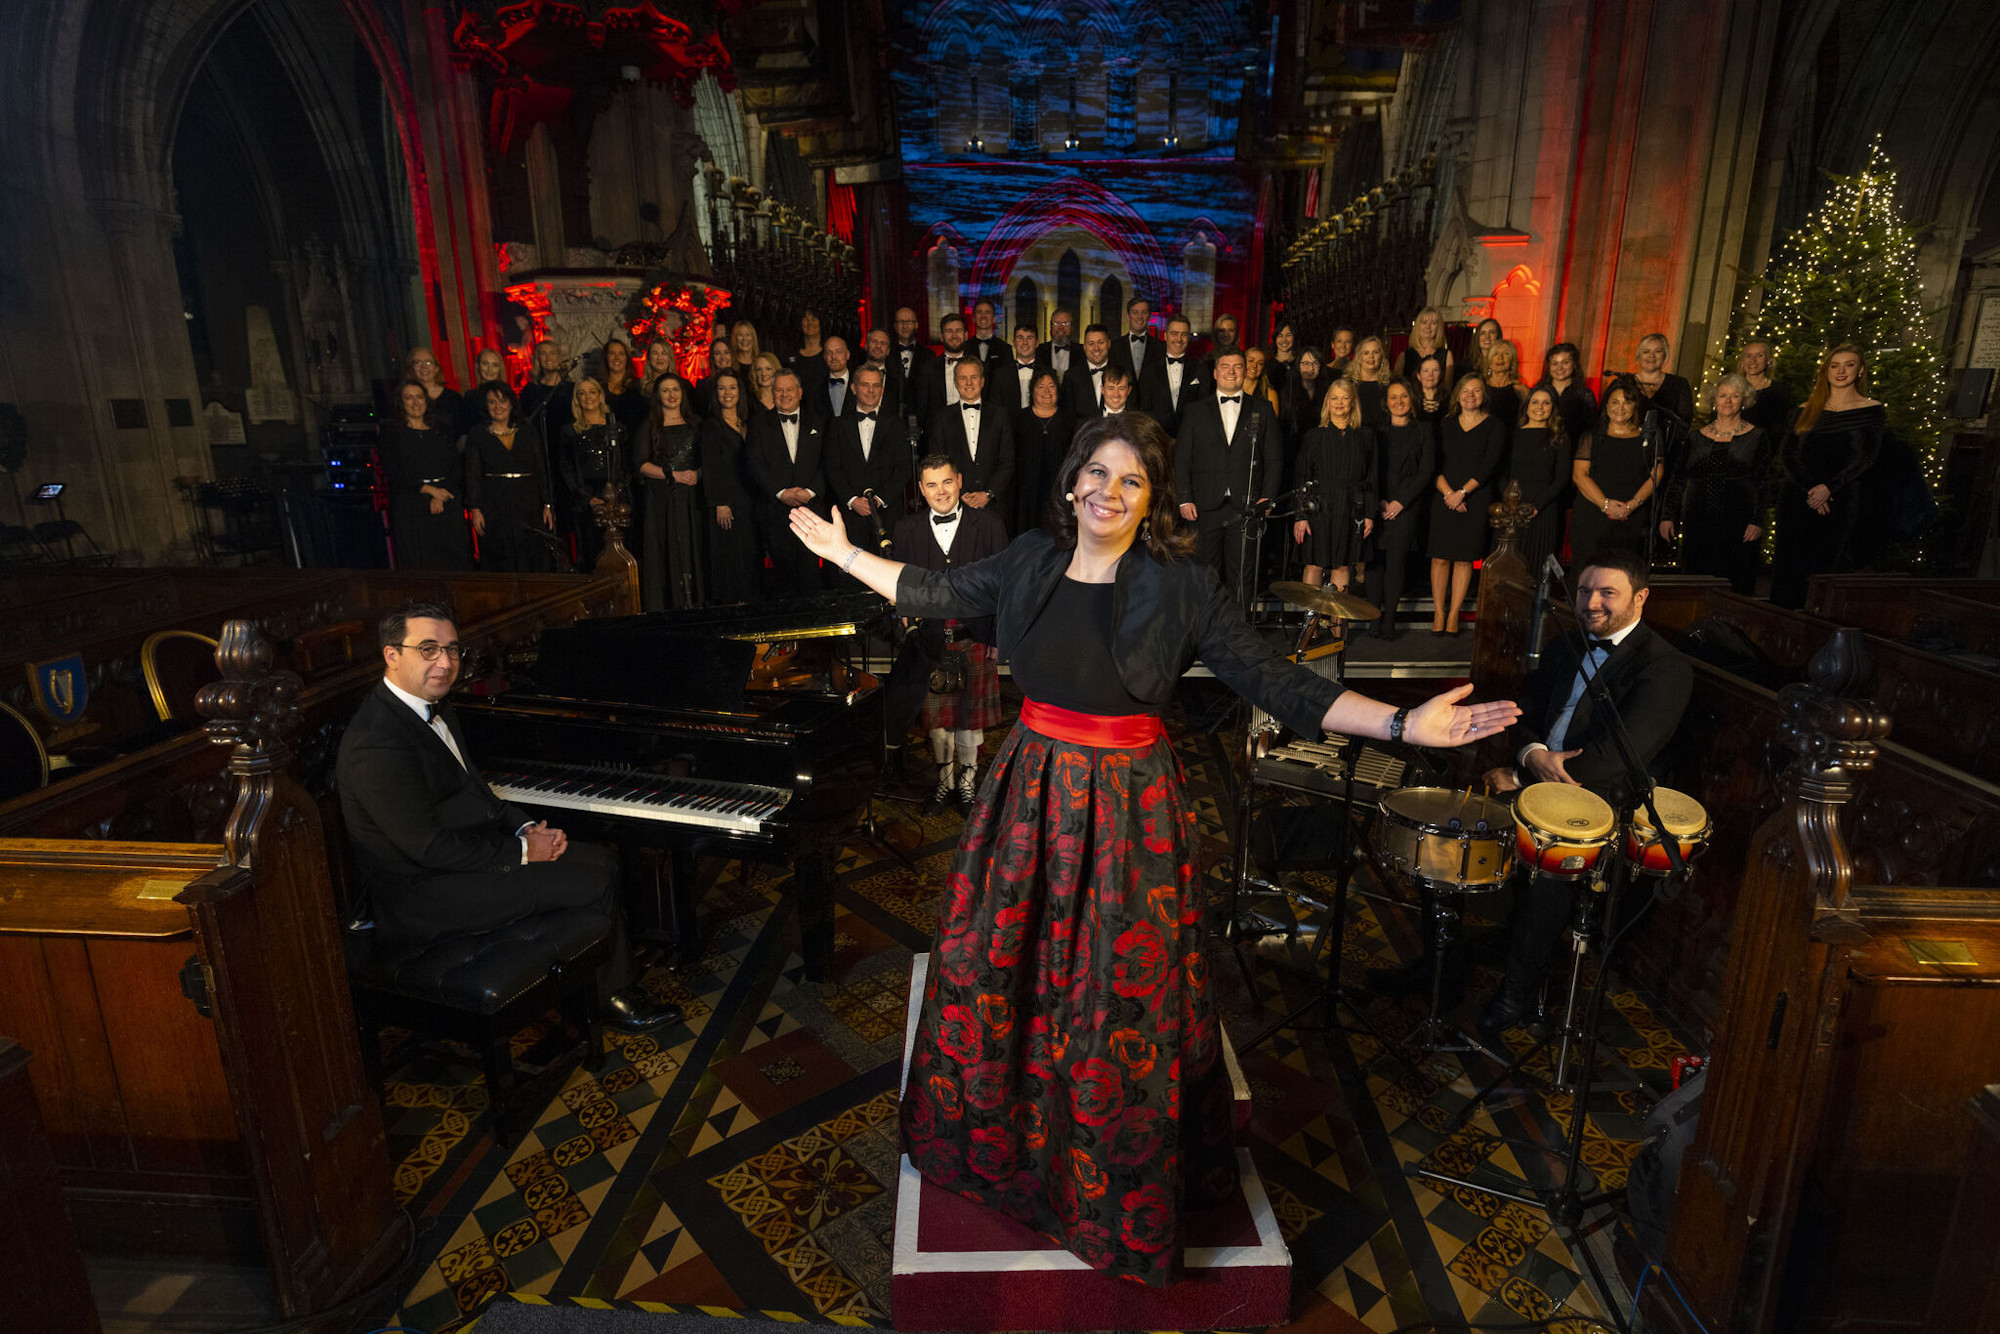 #InPictures: A&L Goodbody Christmas choir raises over €11,000